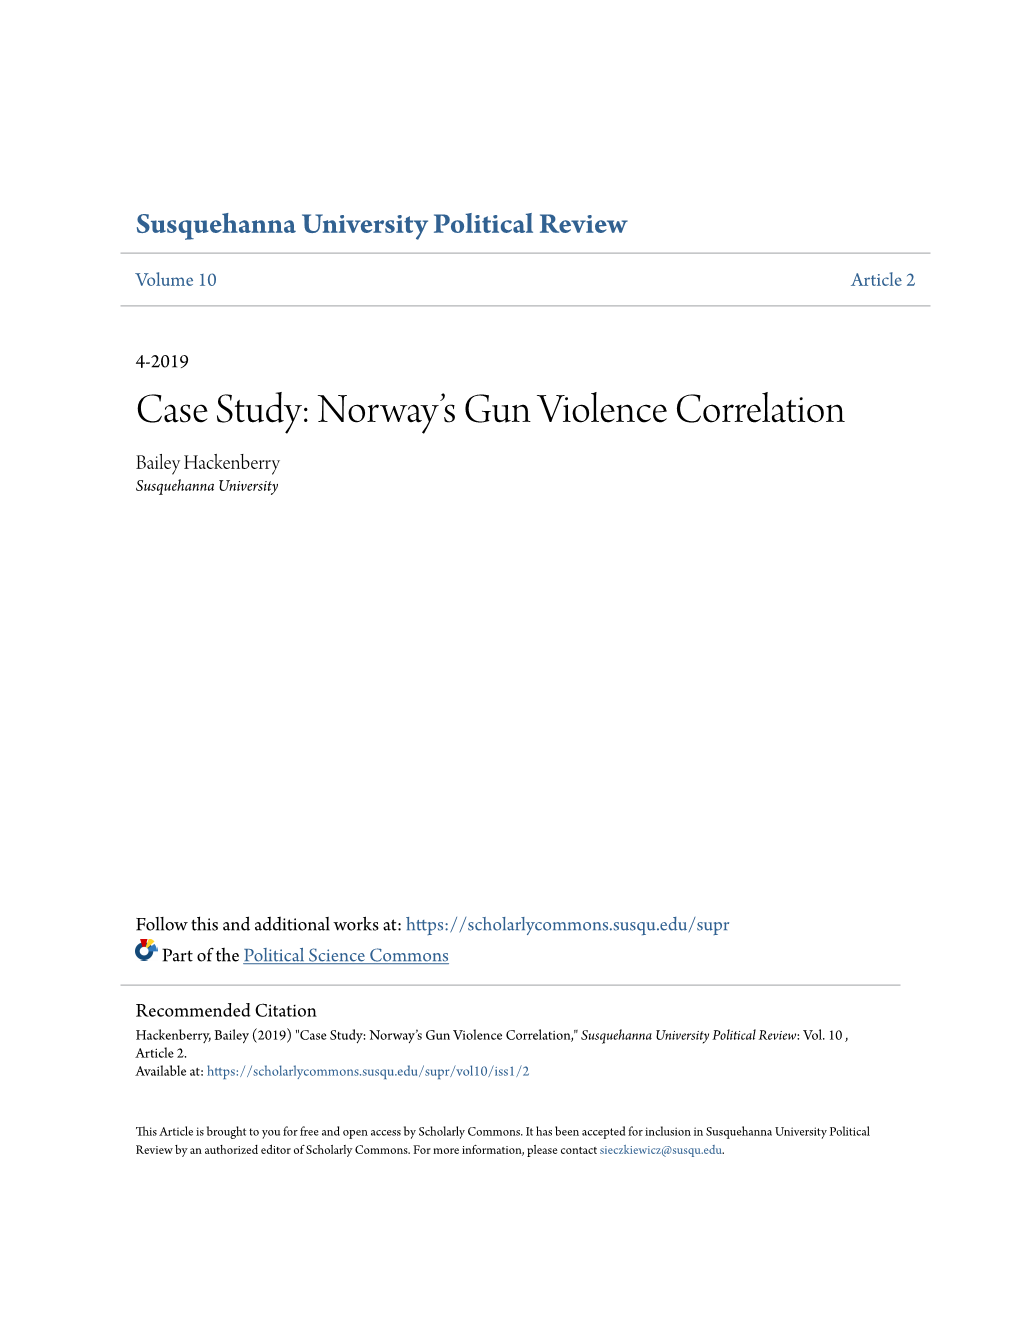 Norway's Gun Violence Correlation